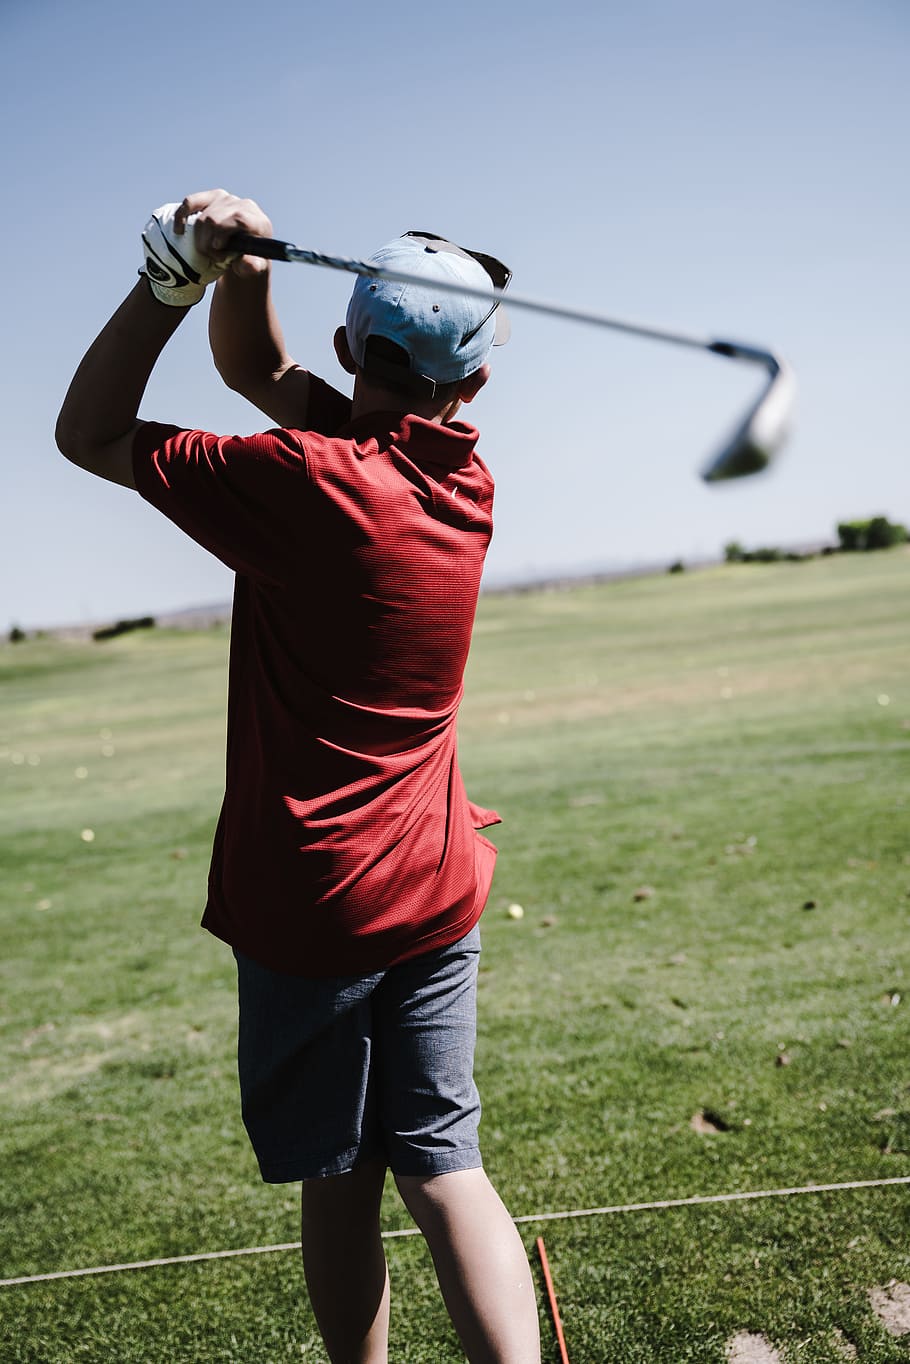 Man Swinging Golf Club Facing Grass Field, adult, athlete, ball